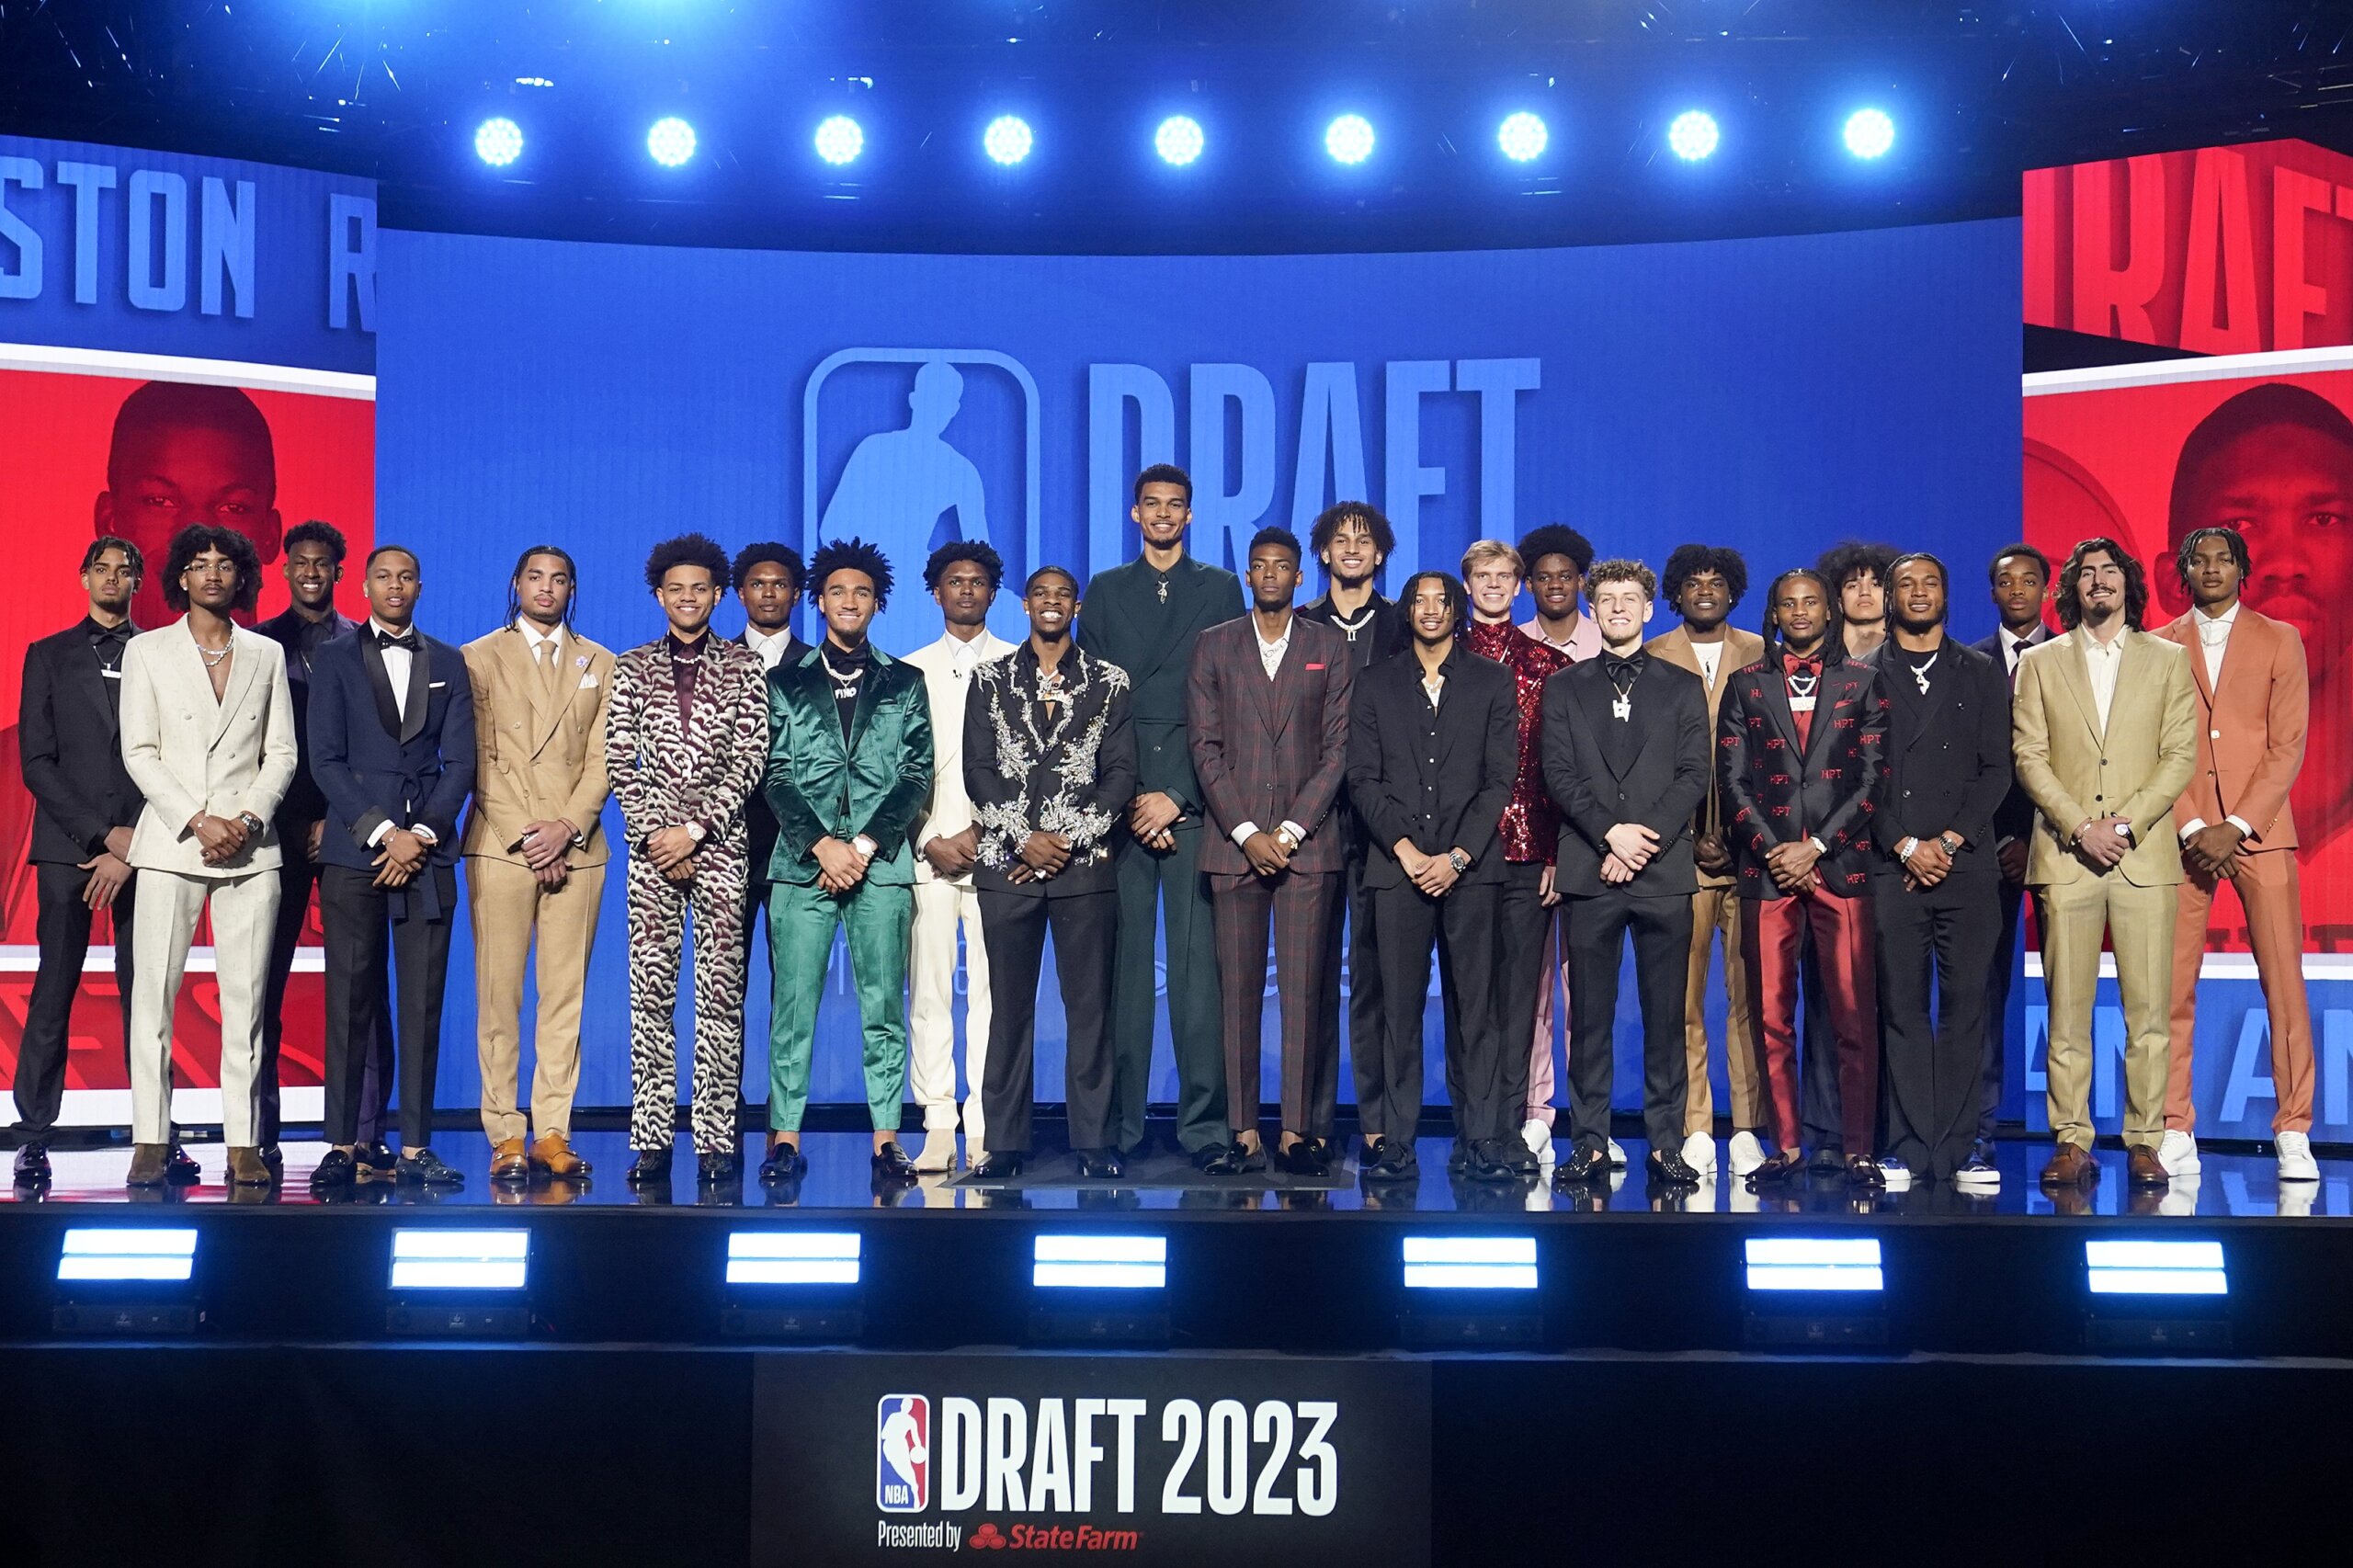 2018 draft picks nba